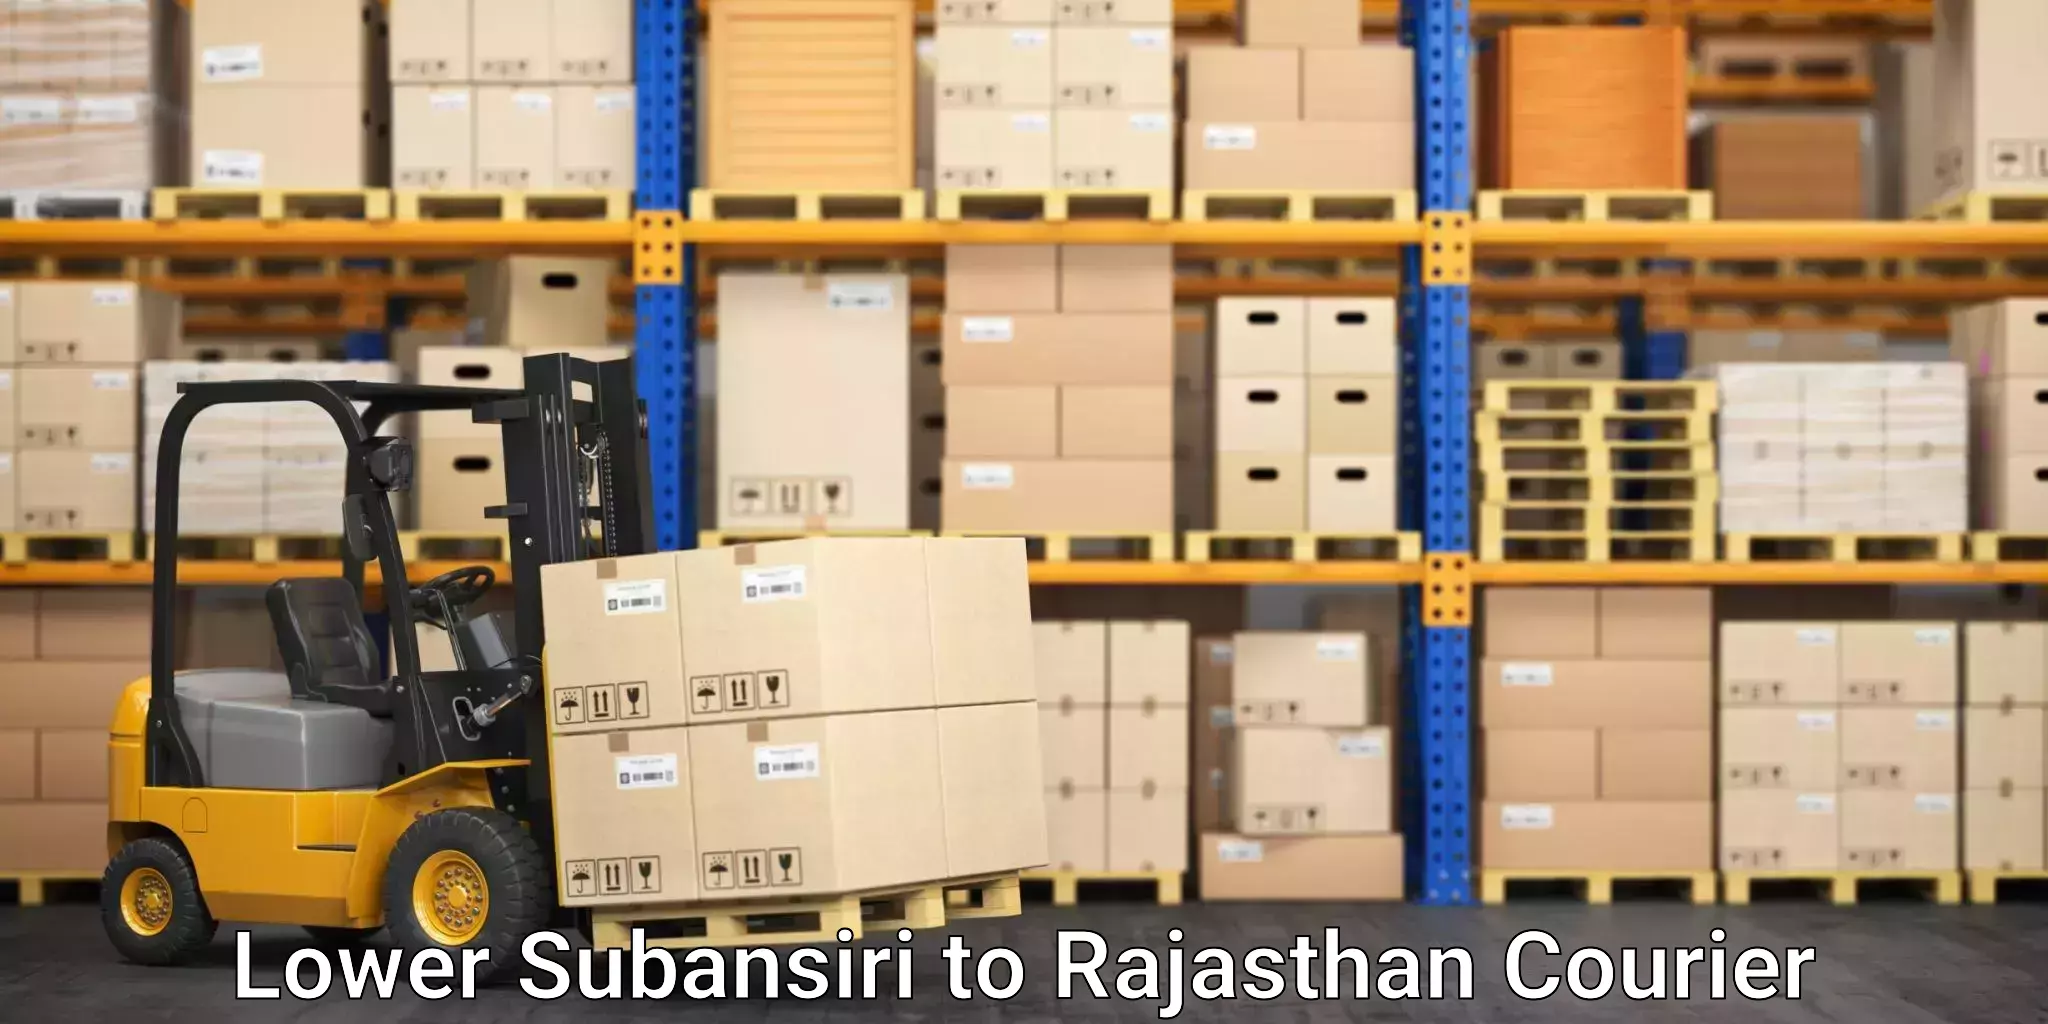 Courier service comparison Lower Subansiri to Rajasthan